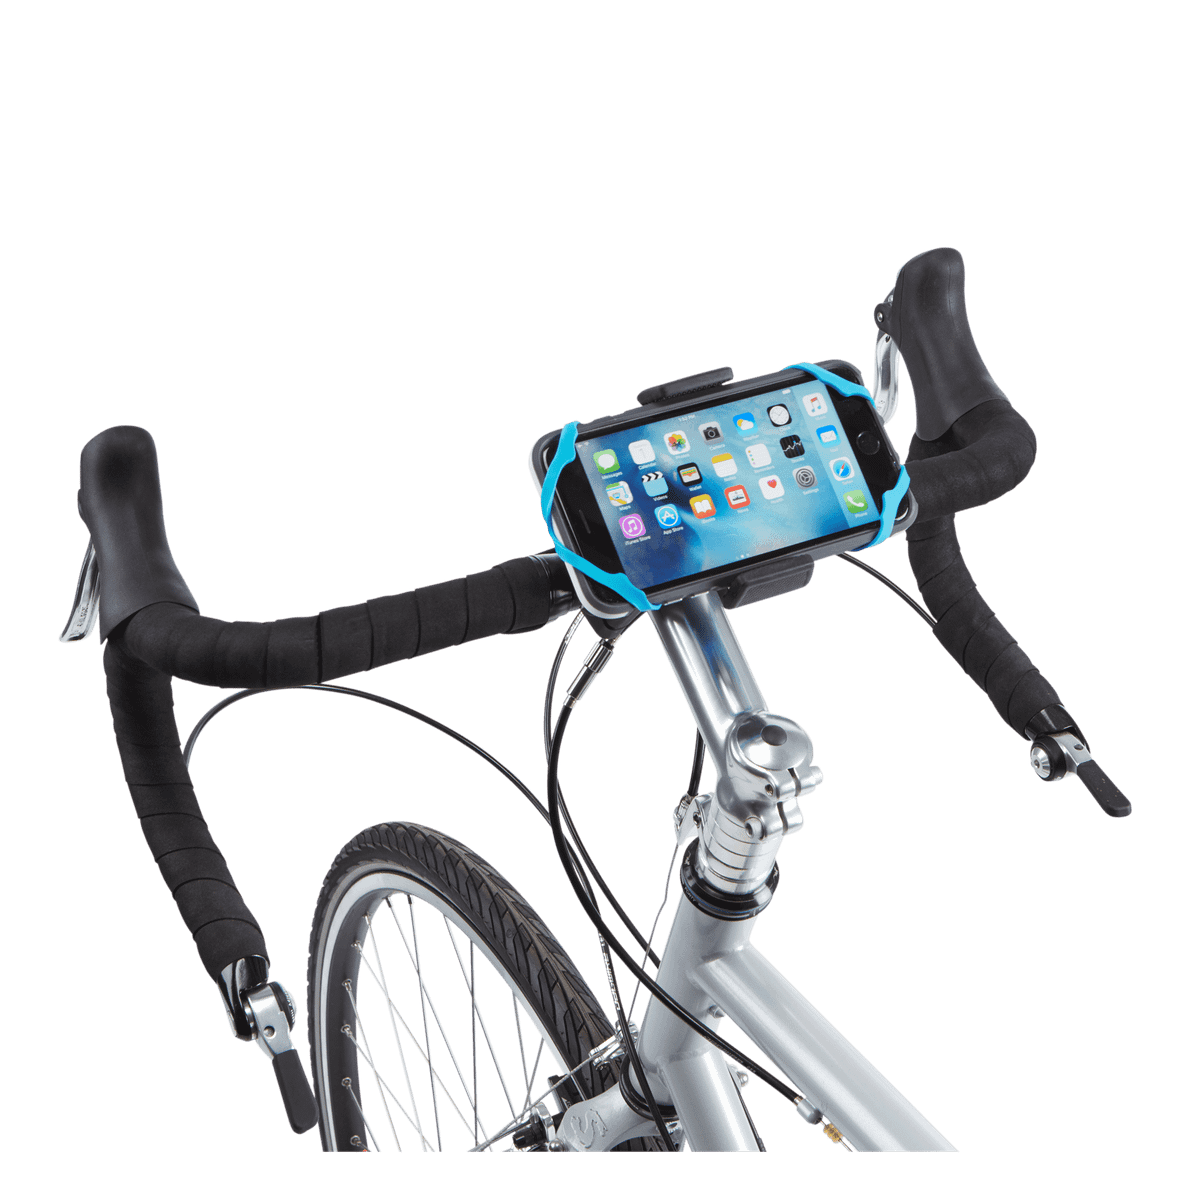 Thule Smartphone Bike Mount